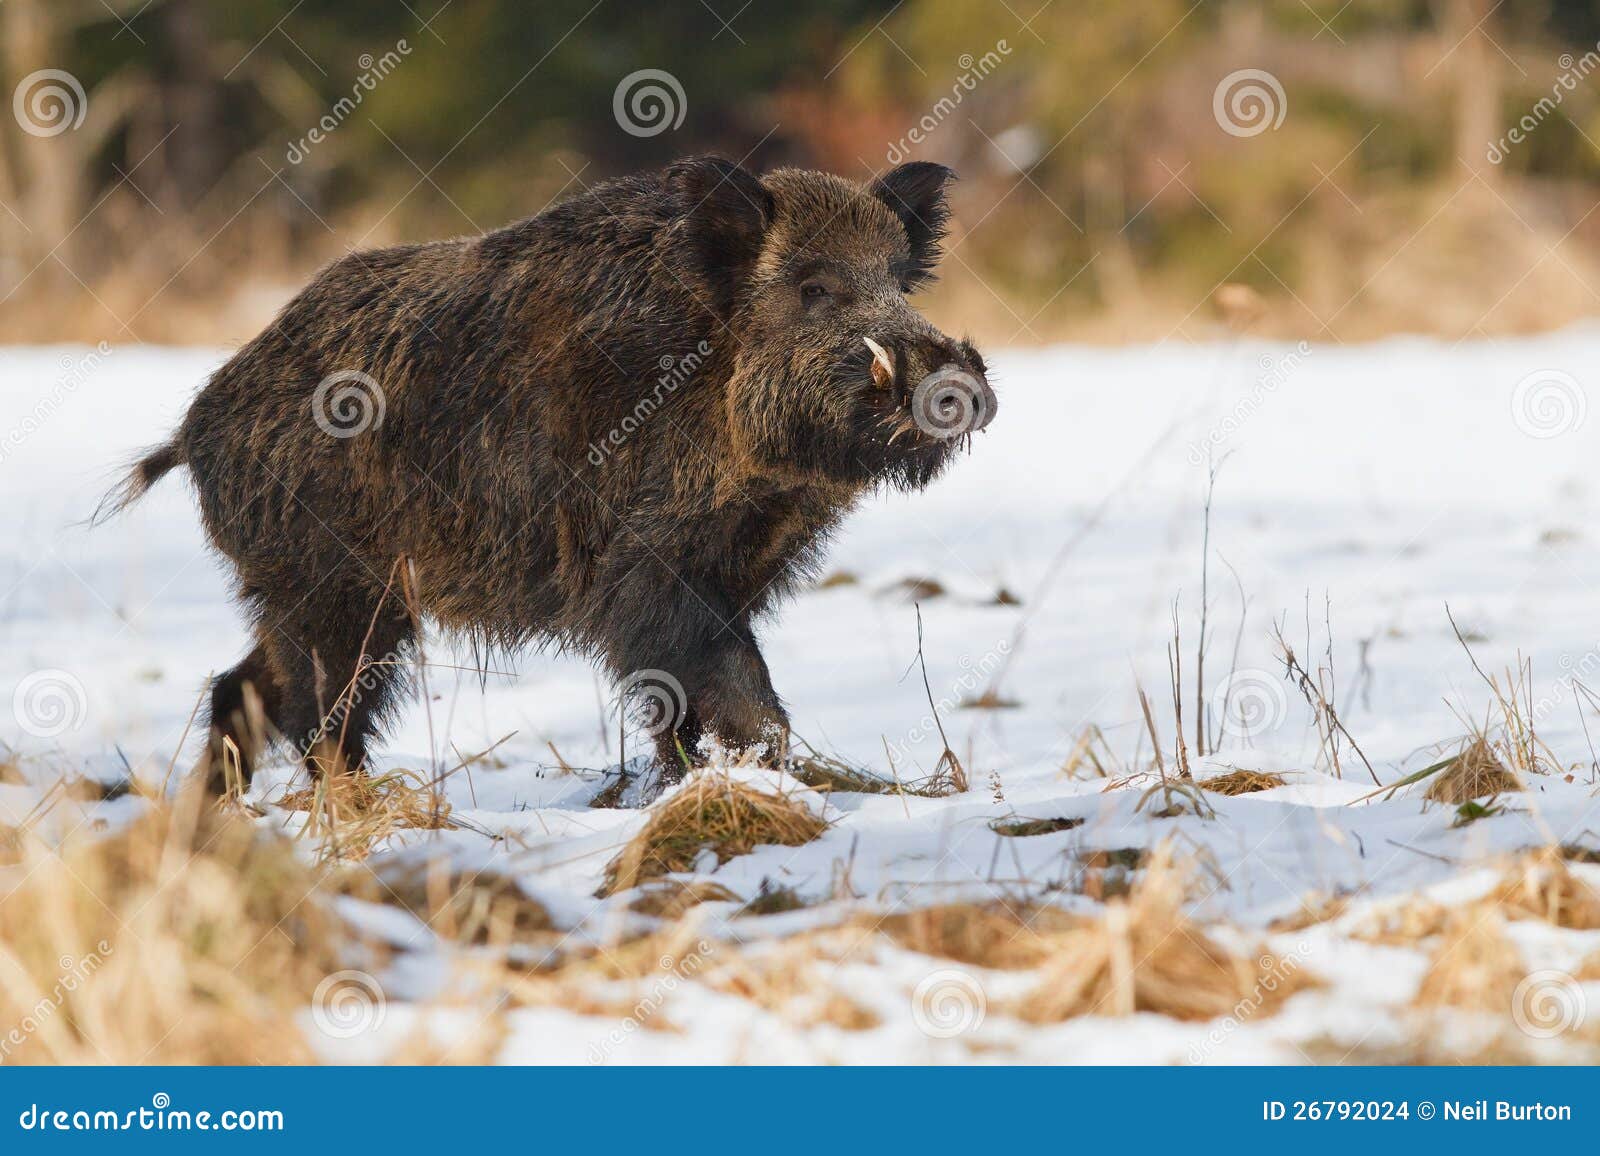 male wild boar in the snow